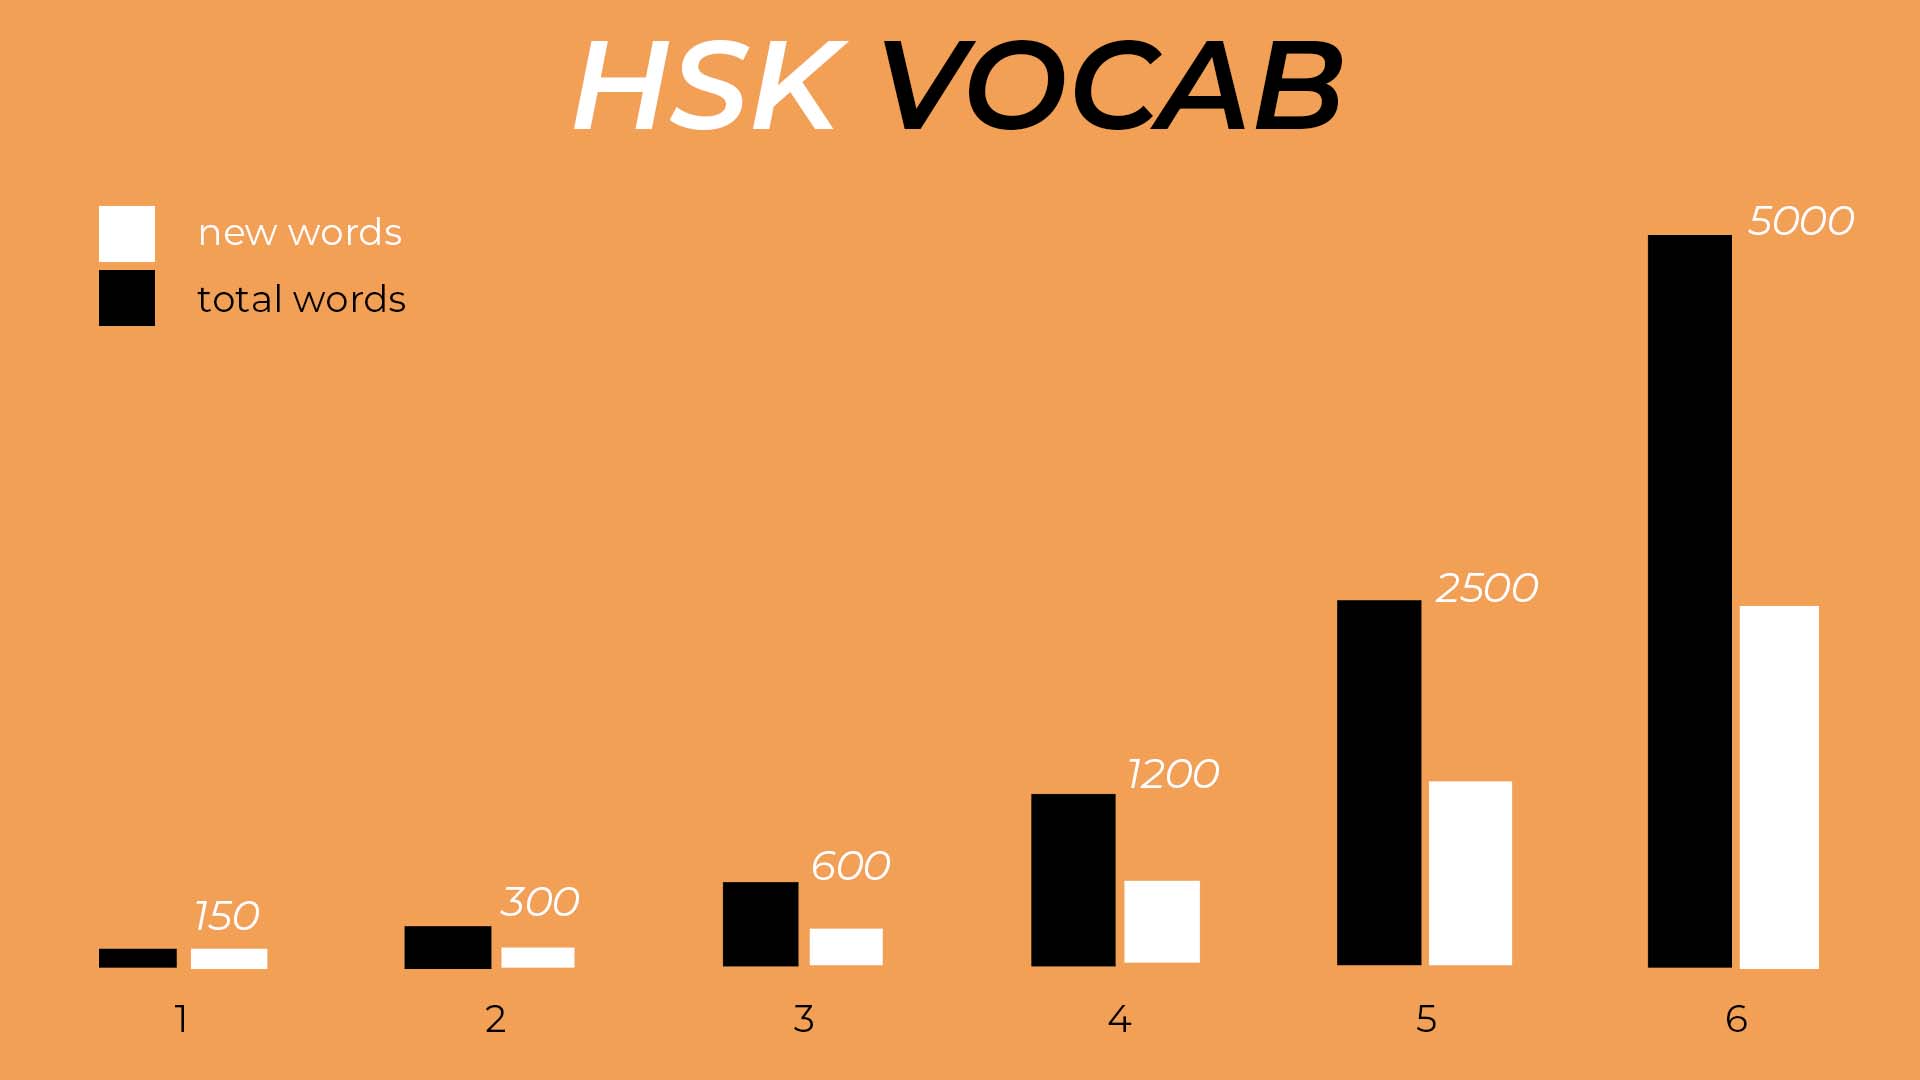 A visual representation of required vocab per HSK level